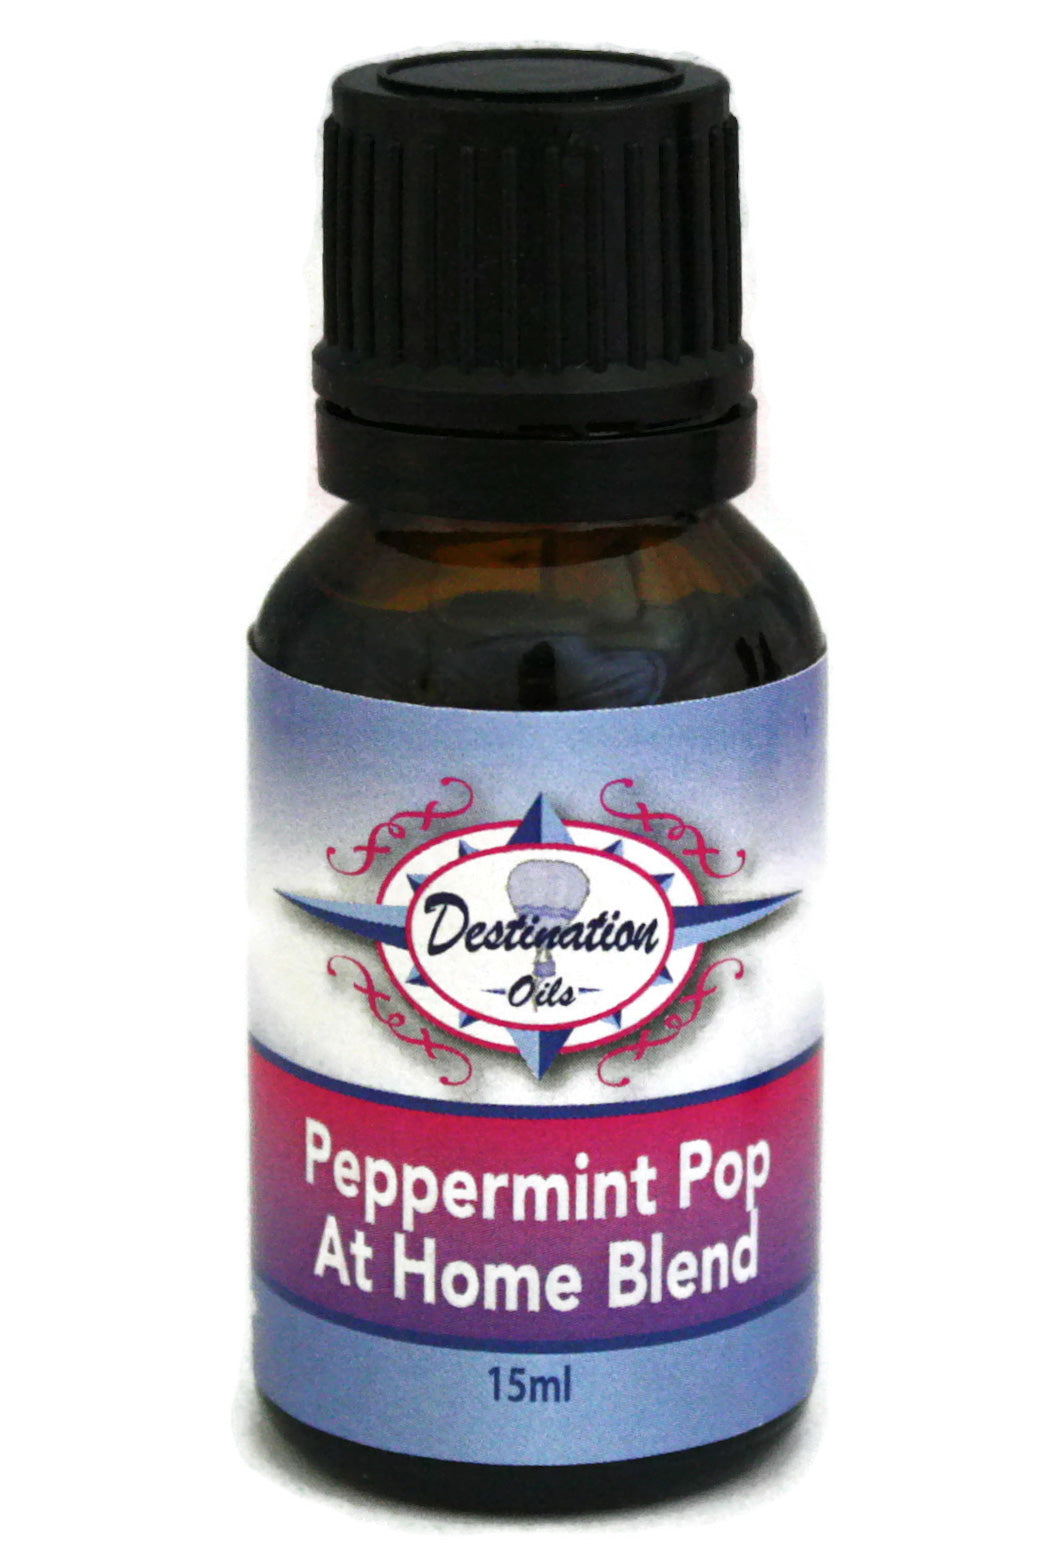 Peppermint Pop - At Home Essential Oil Blend - 15ml-Essential Oil Blend-Destination Oils